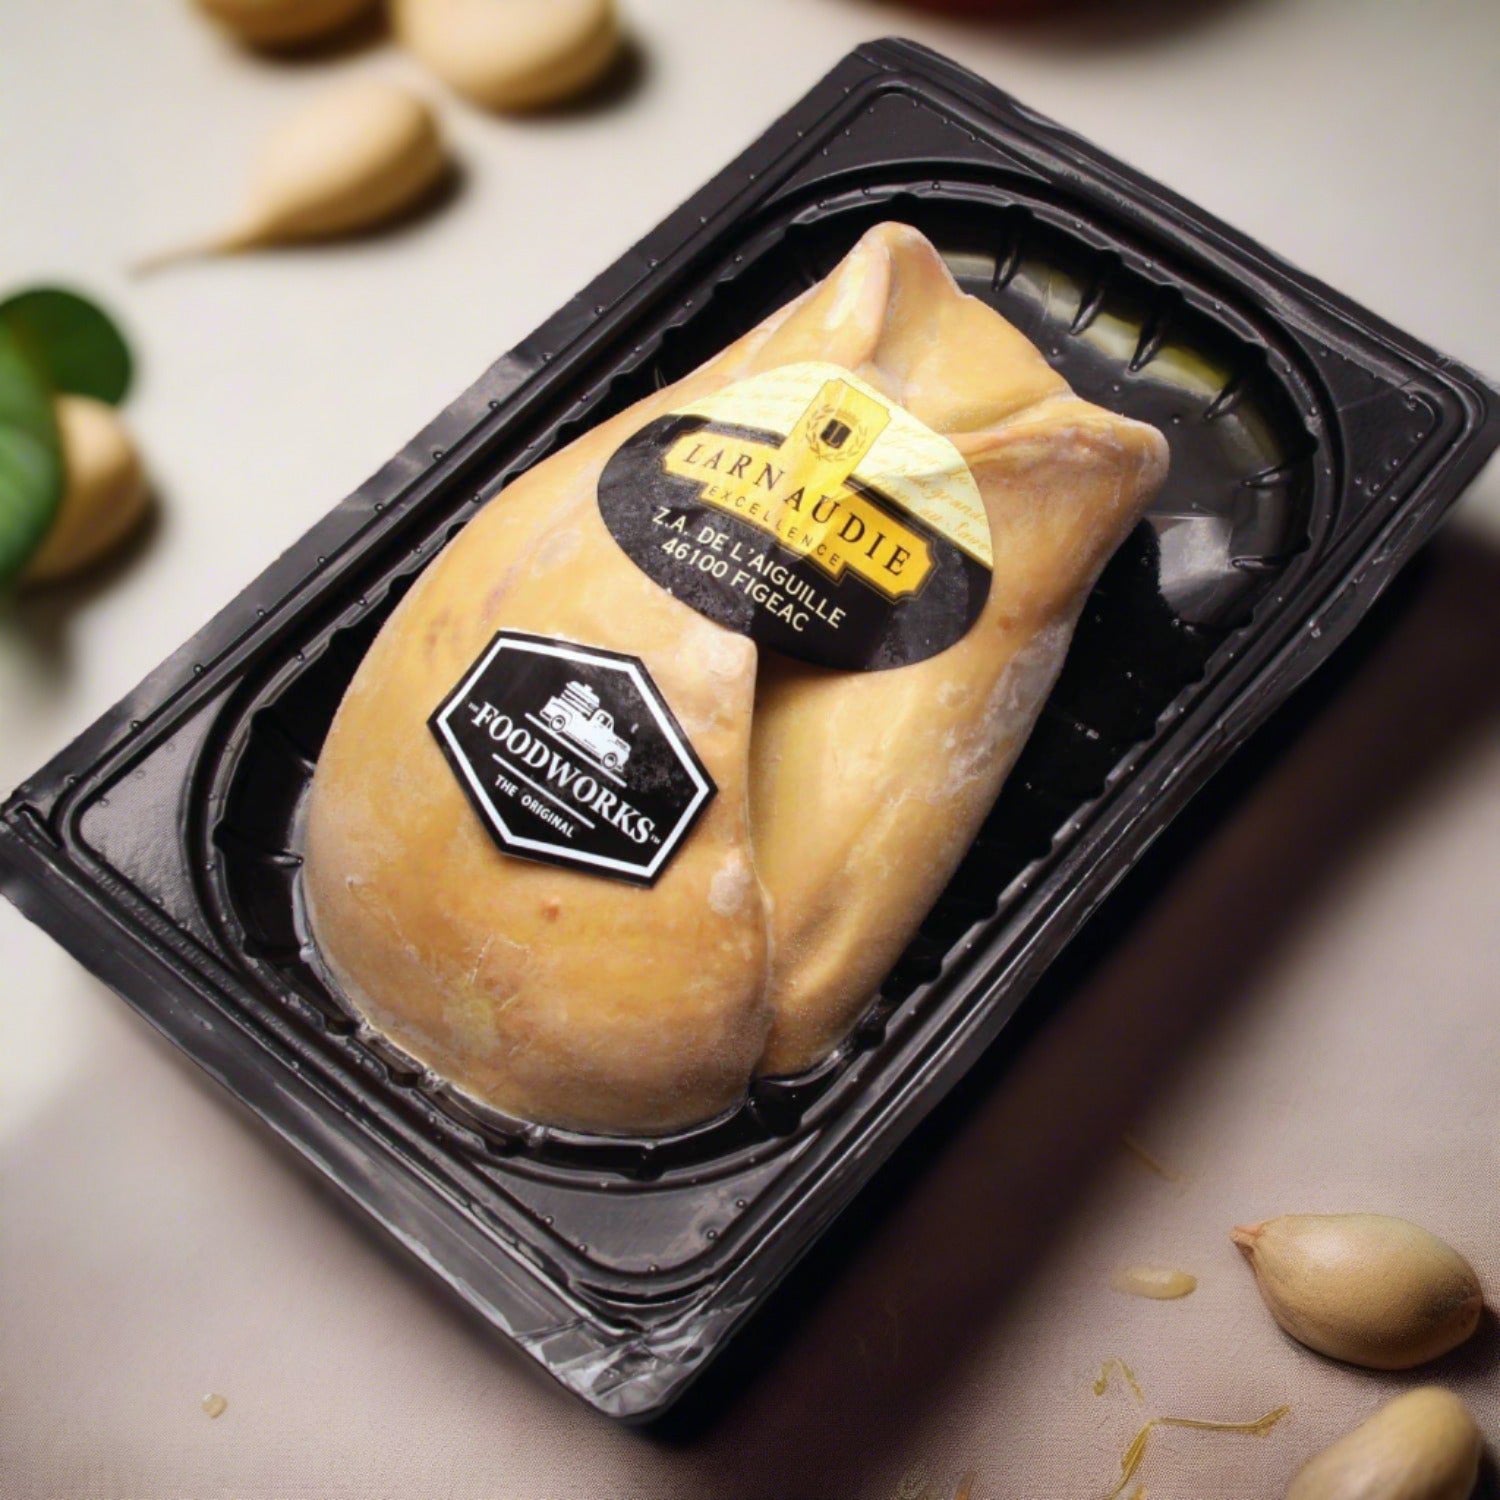 Jean Larnaudie "Extra Choice" Foie Gras ฟัวกราส์ฝรั่งเศส แบรนด์ ลา นูร์ดี เกรด เอ็กซ์ตรา ชอยส์ - The Foodworks 